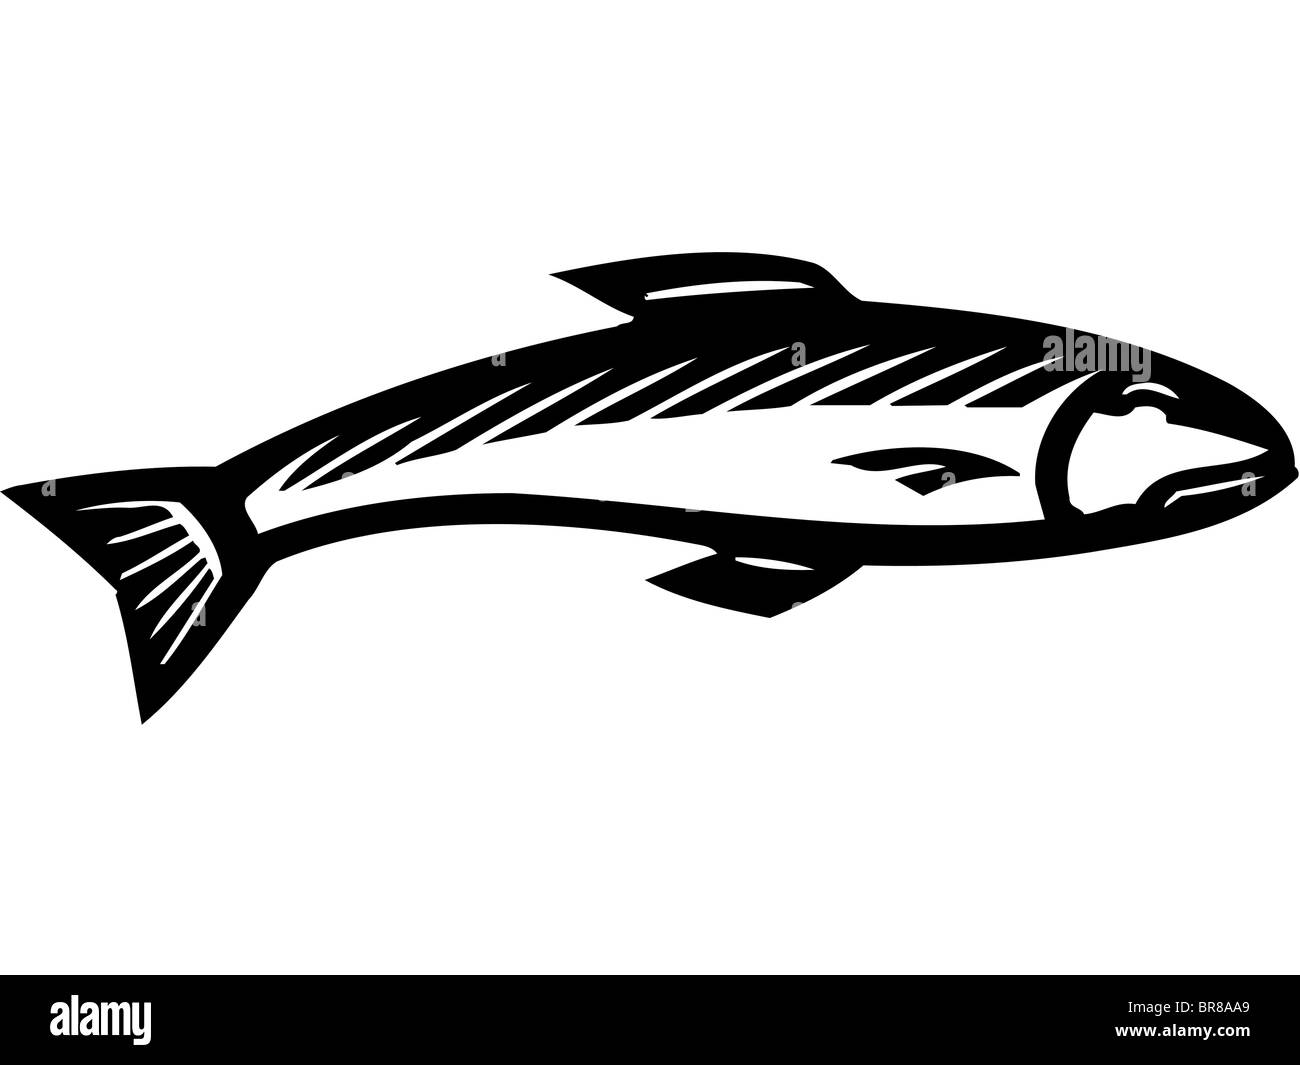 Do Fish Fart? by Arrincat | TPT